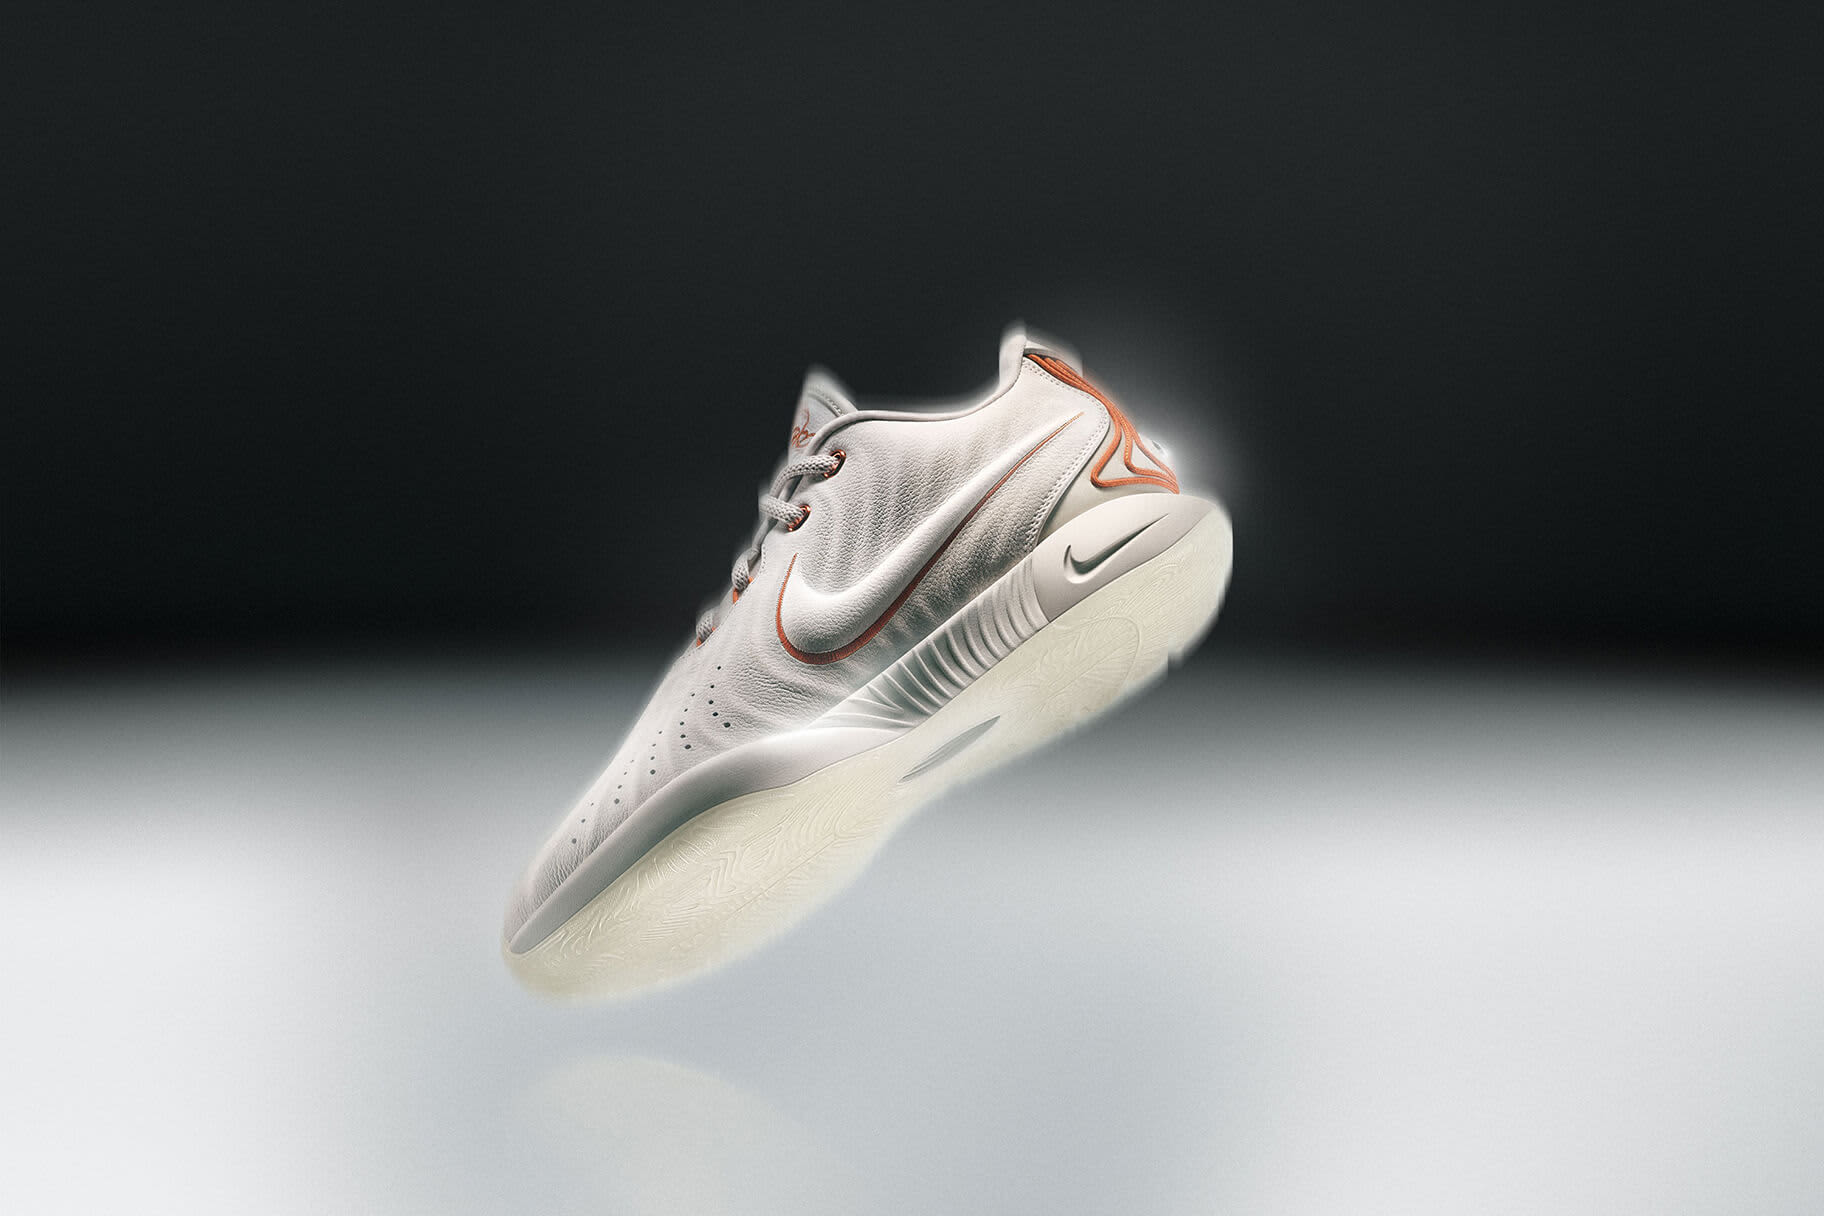 Nikeがレブロン 21を発表